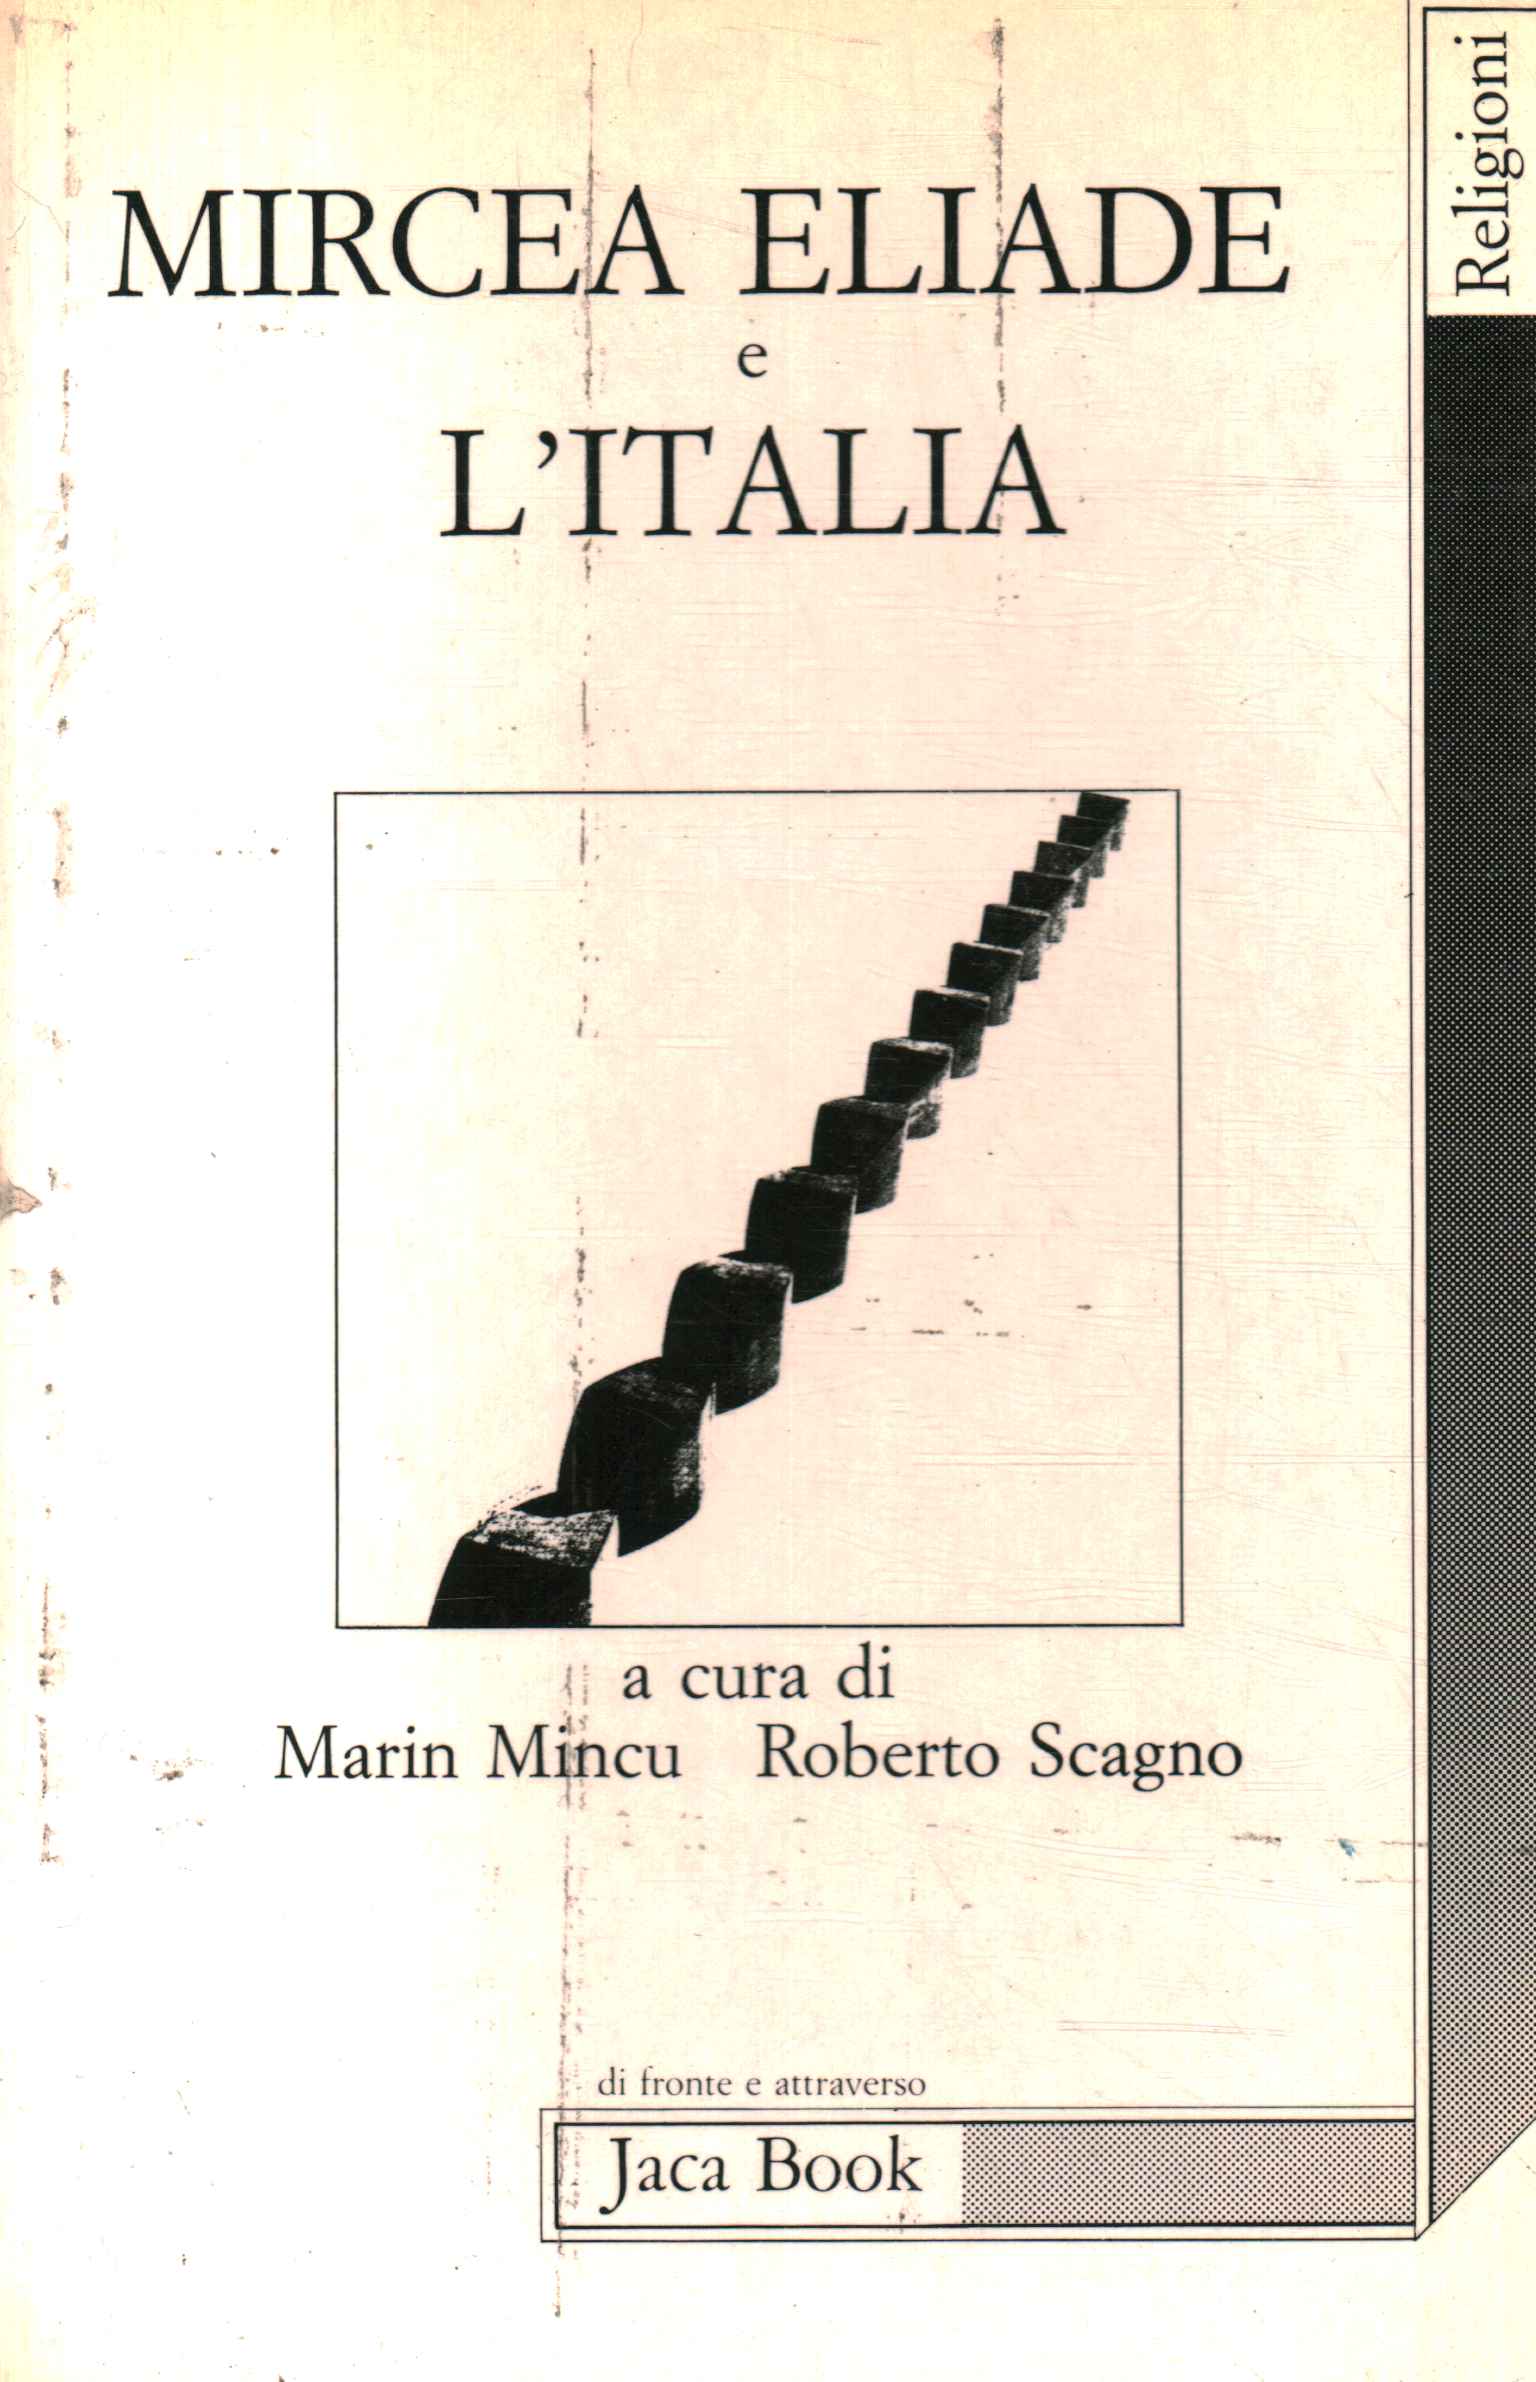 Mircea Eliade and Italy